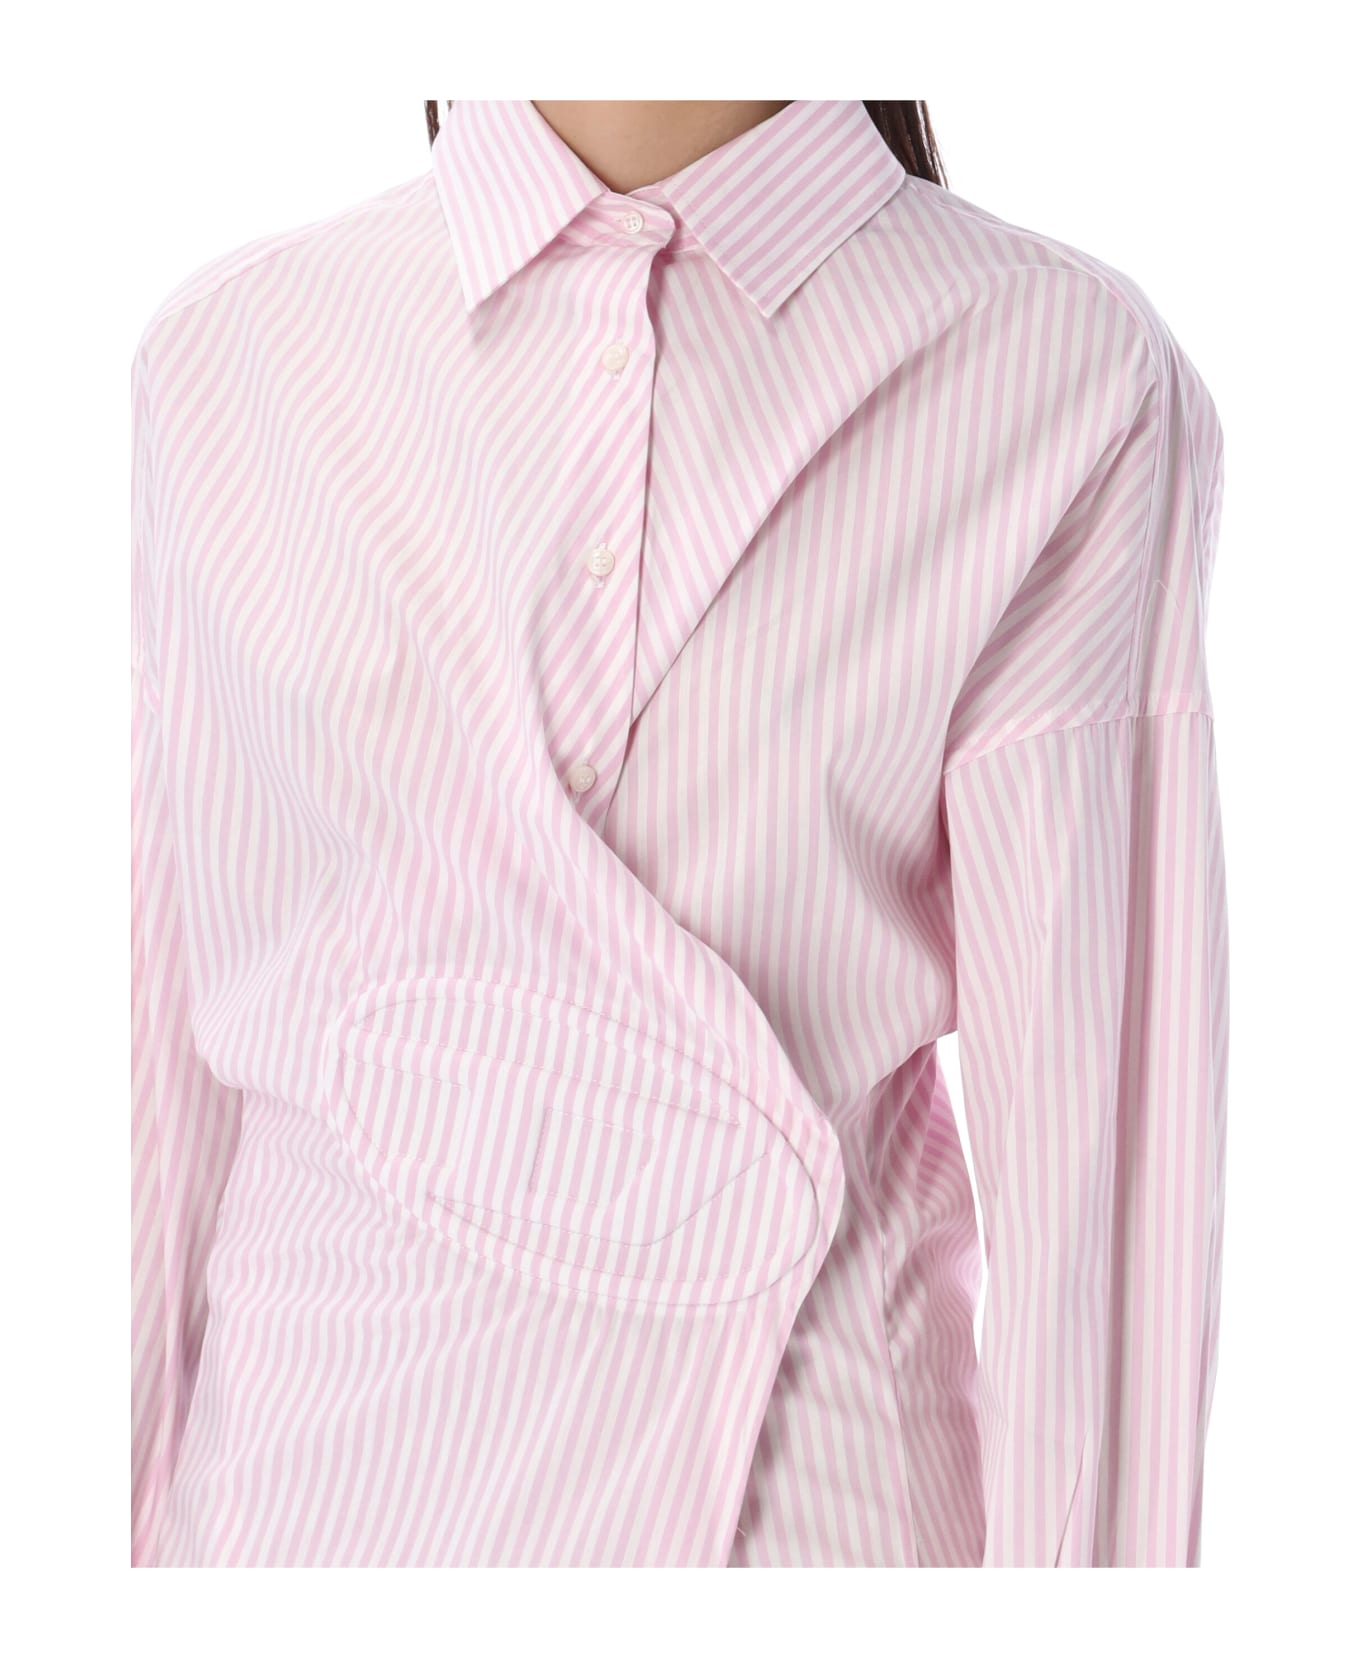 Diesel D-sizen Shirt Dress - ROSE STIPE